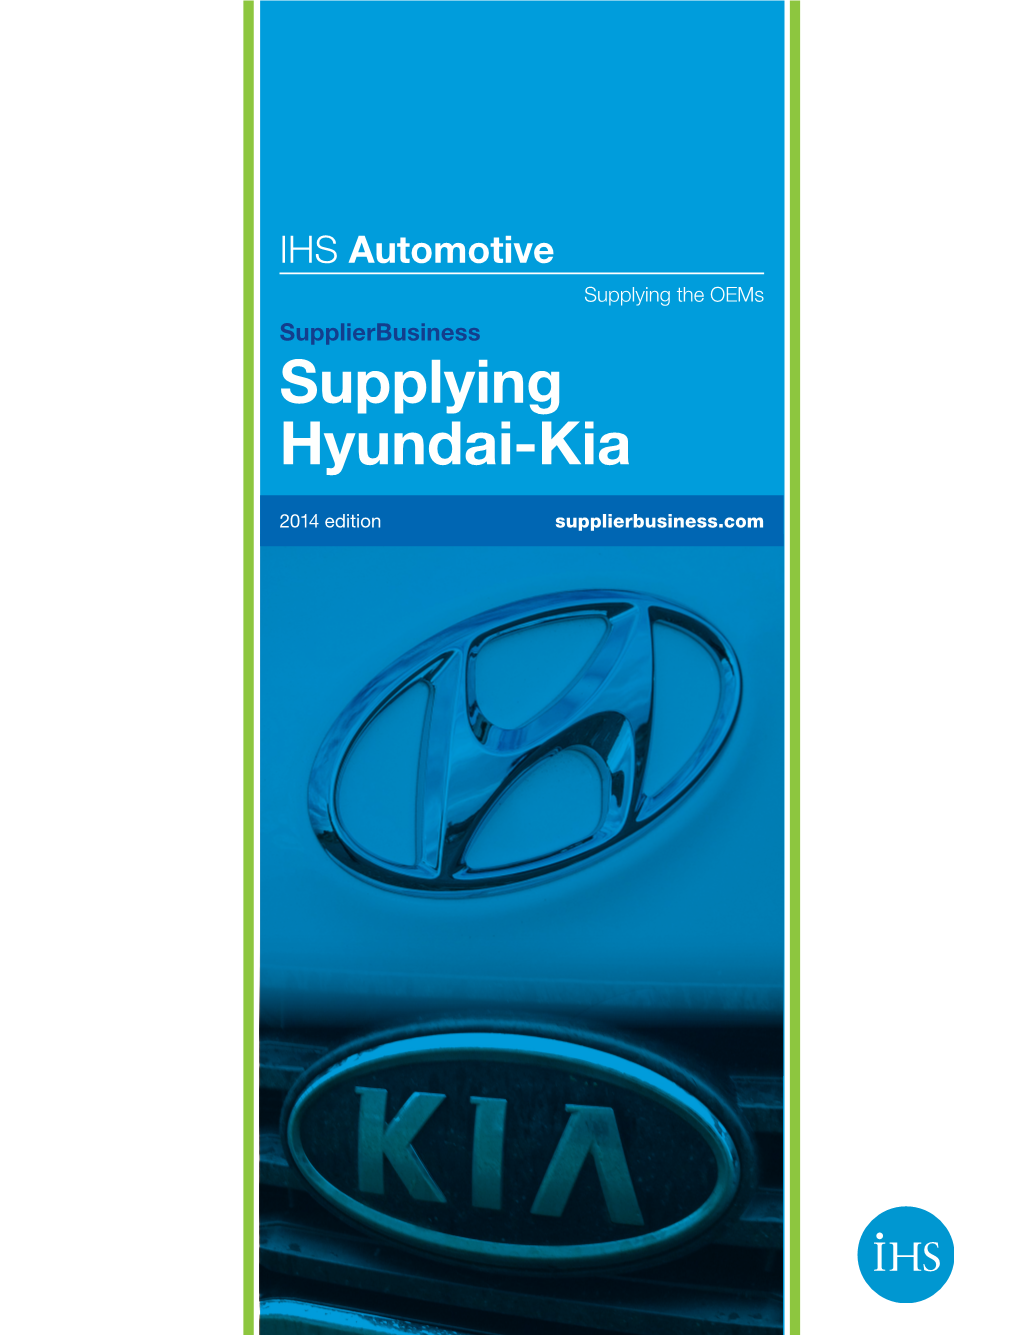 Supplying Hyundai-Kia